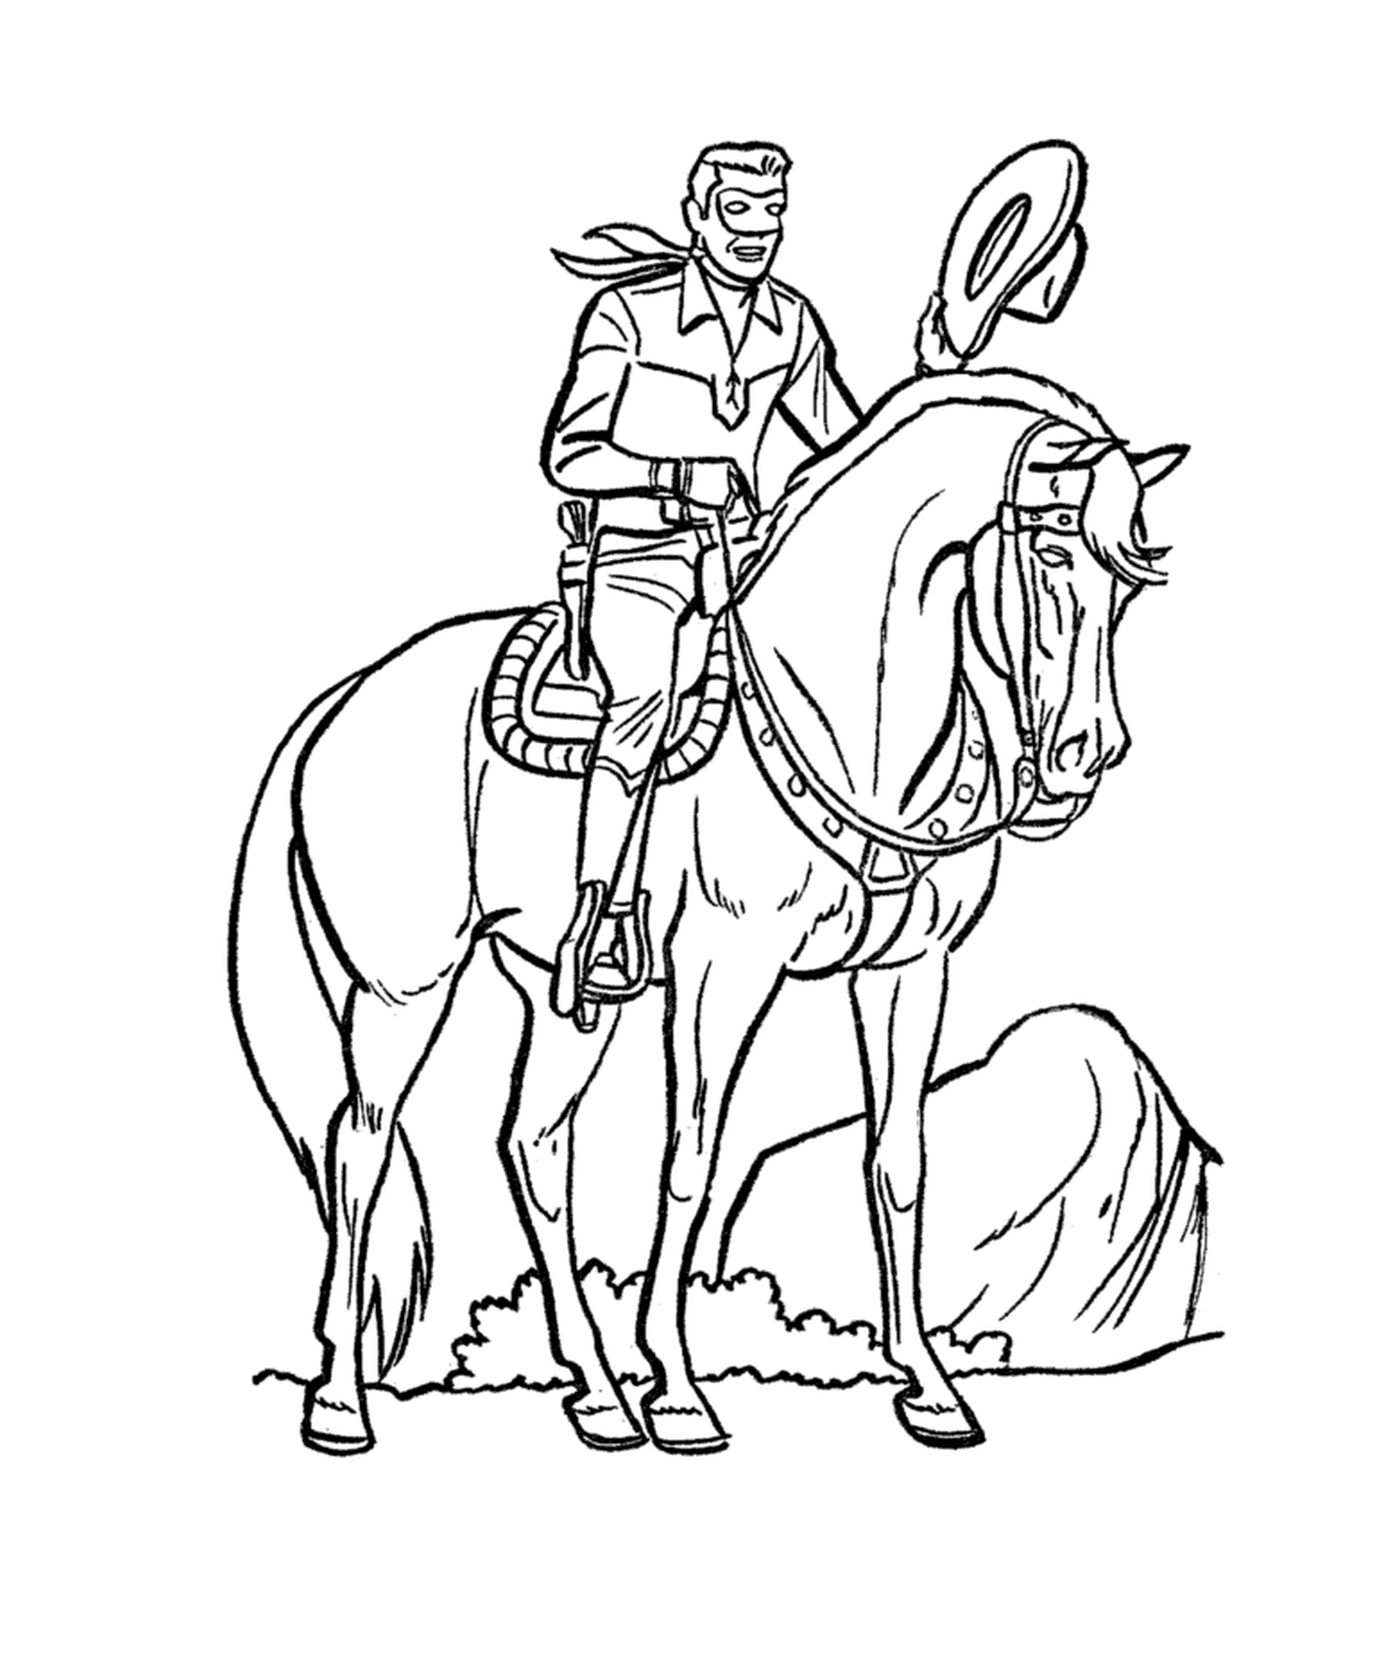  Zorro on horseback 